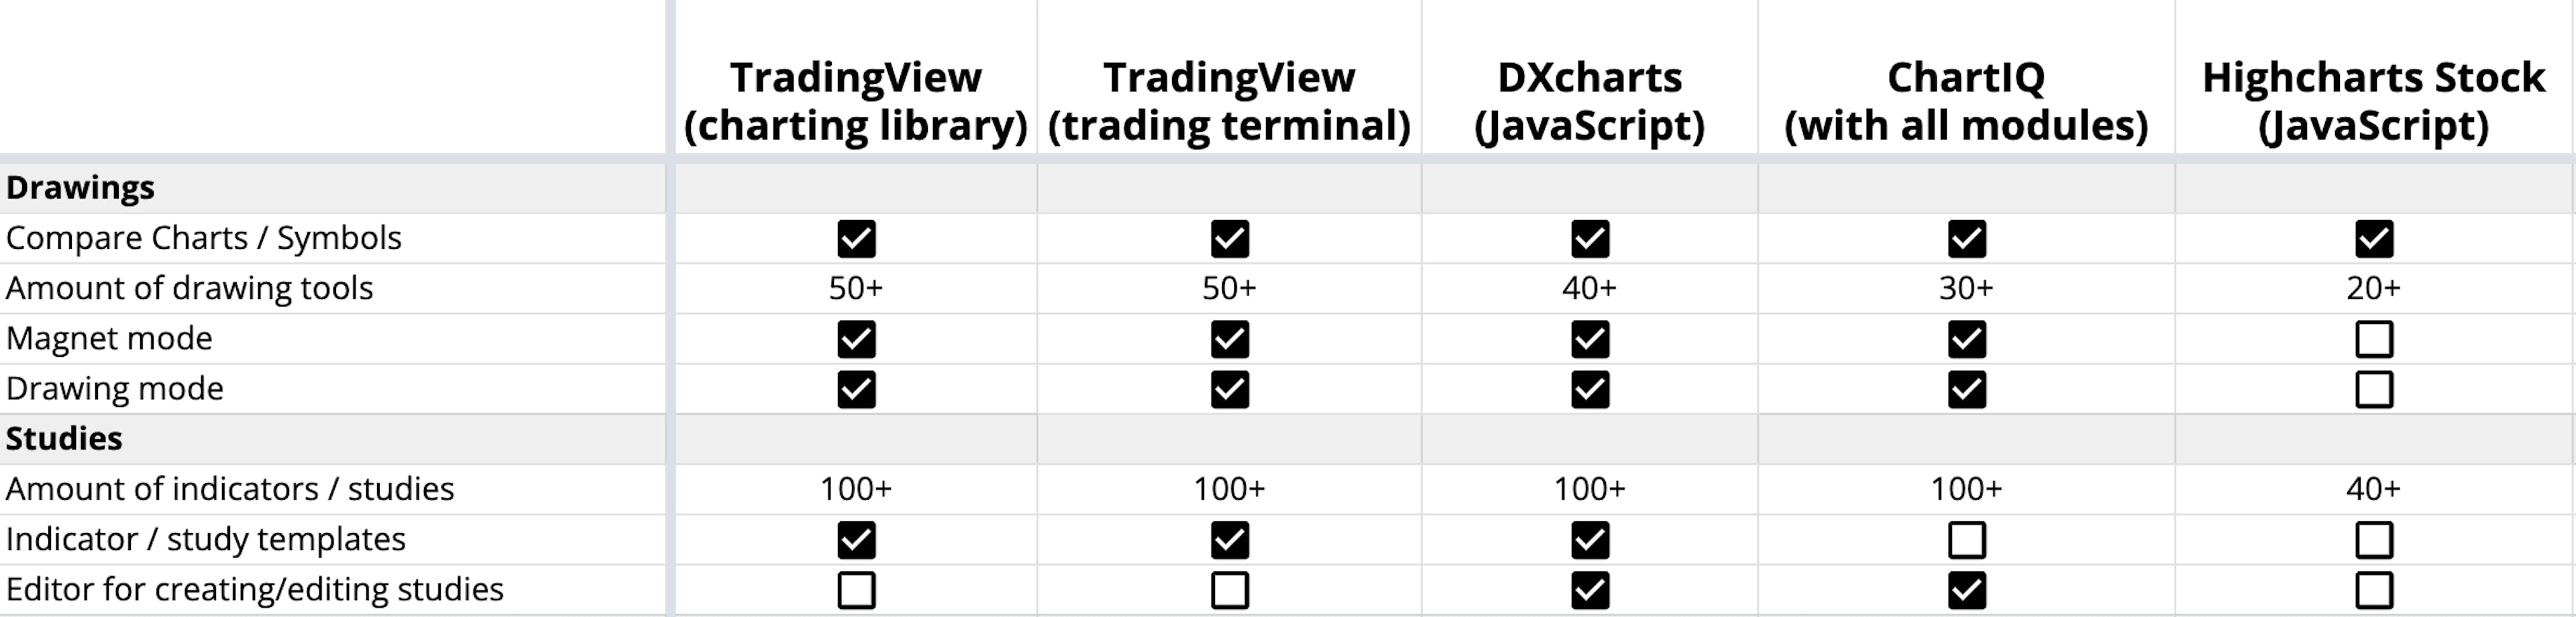 Drawings & indicators in TradingView, DXcharts, ChartIQ & Highcharts